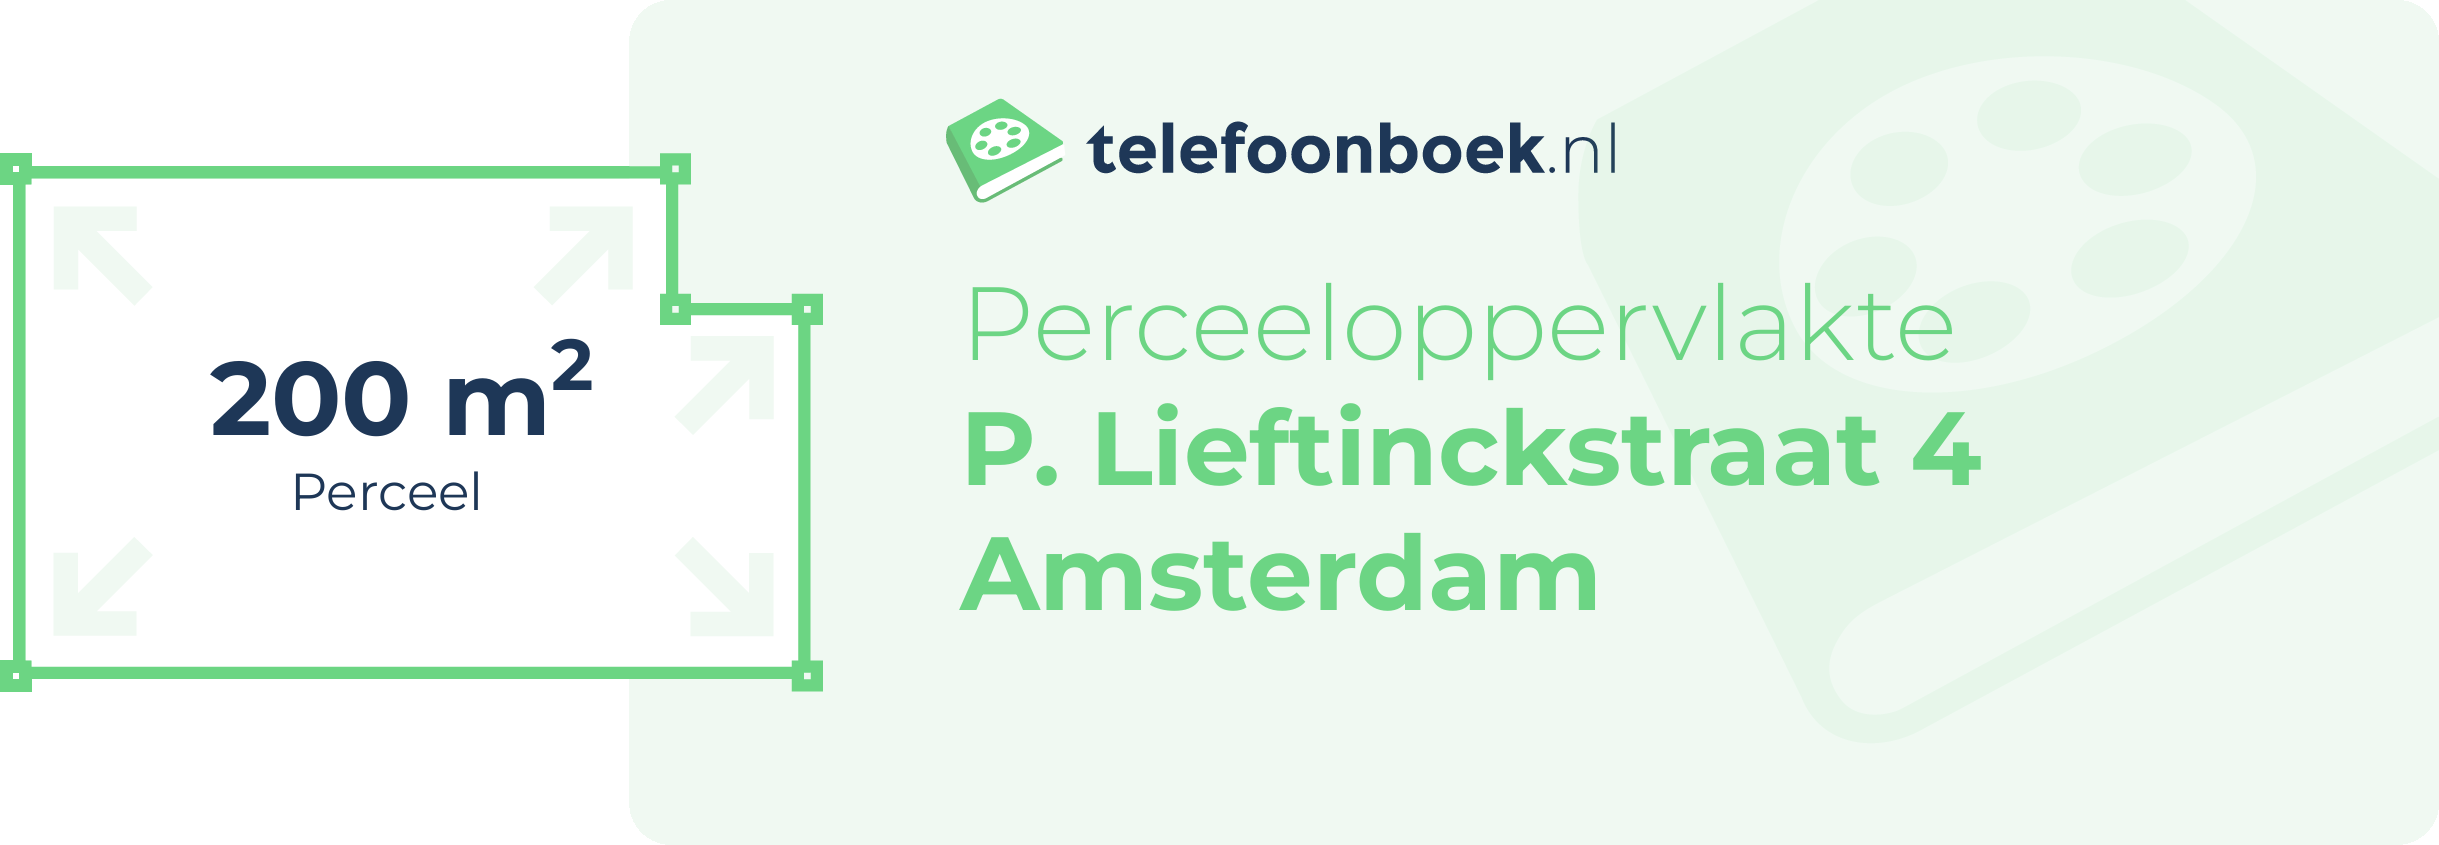 Perceeloppervlakte P. Lieftinckstraat 4 Amsterdam